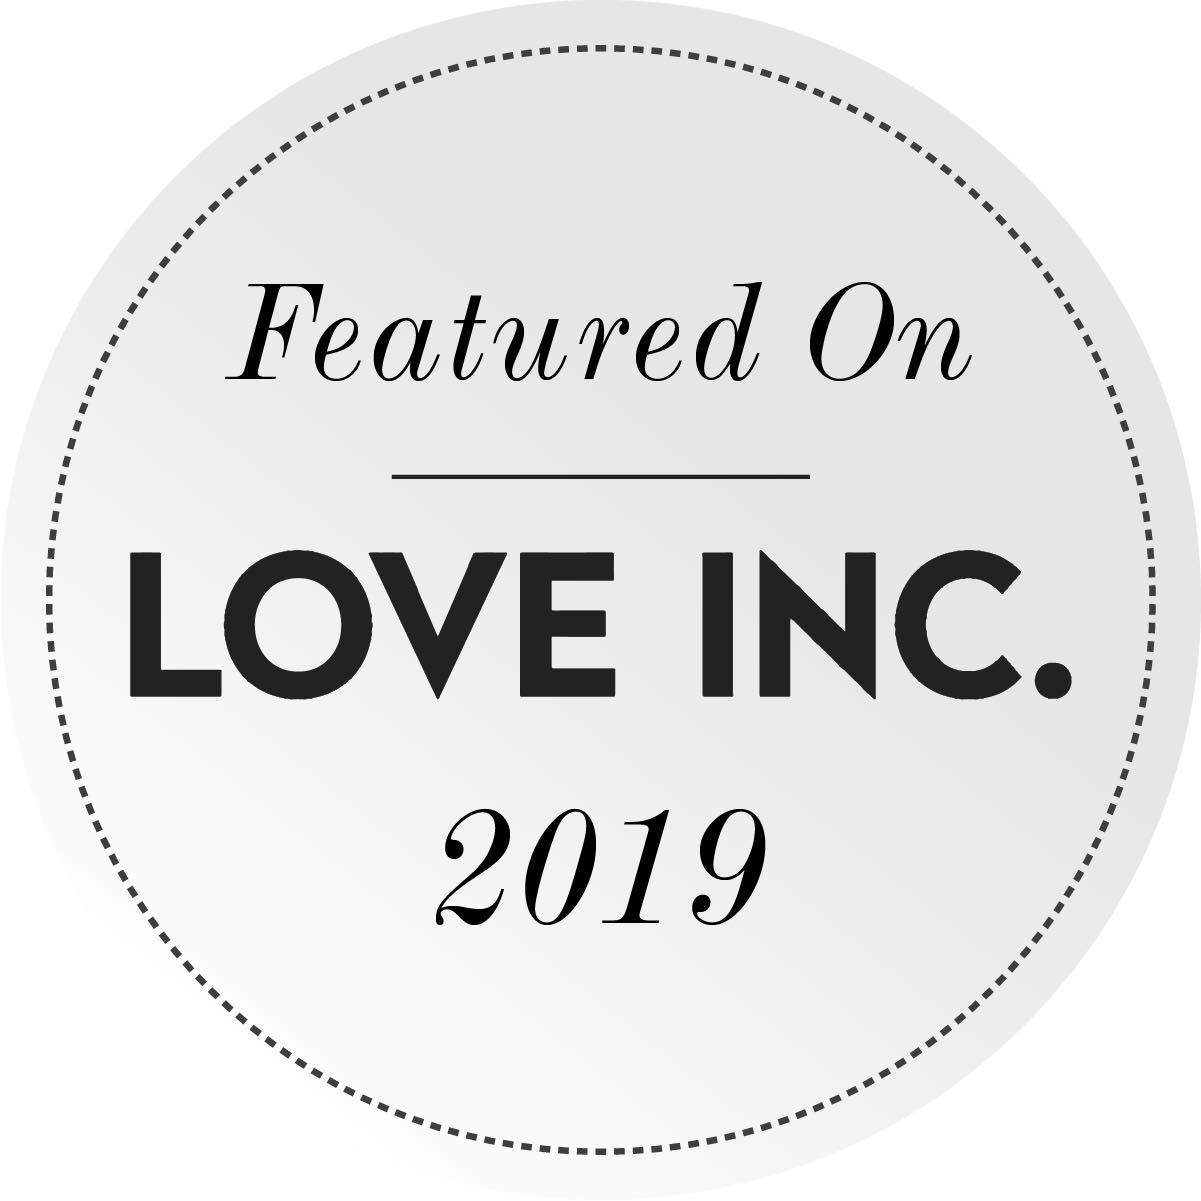 Love inc_2019 badge.jpg